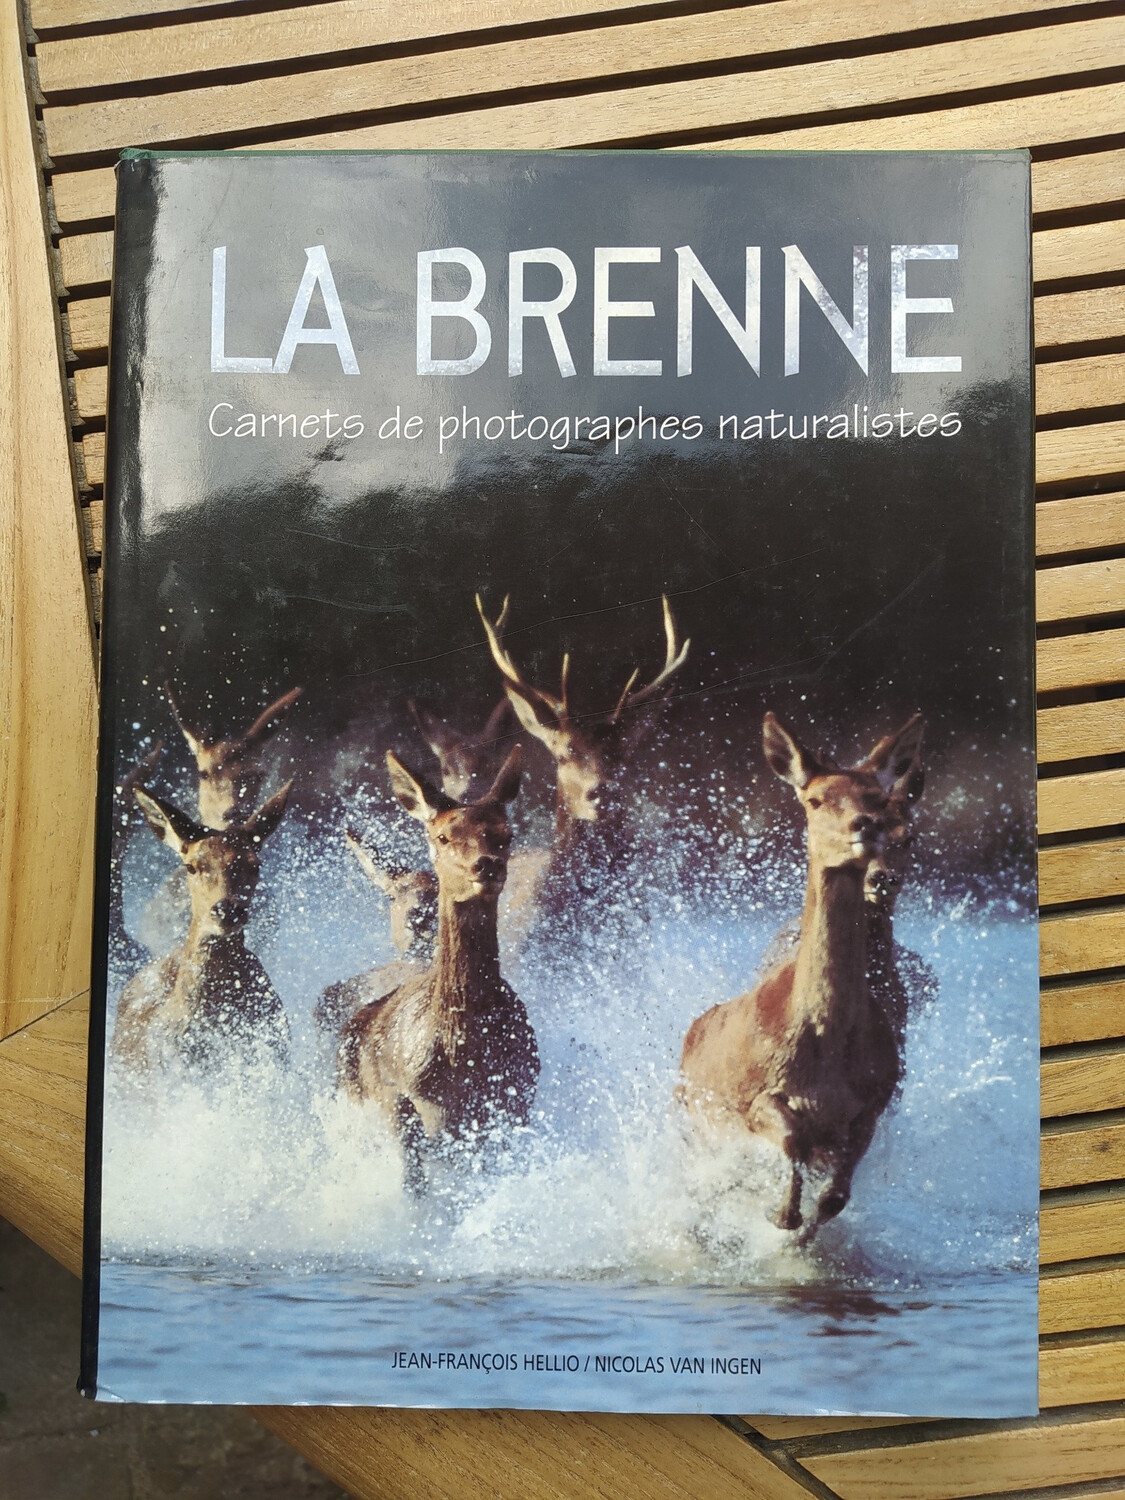 Livre "La Brenne" de Jean Francois Hello